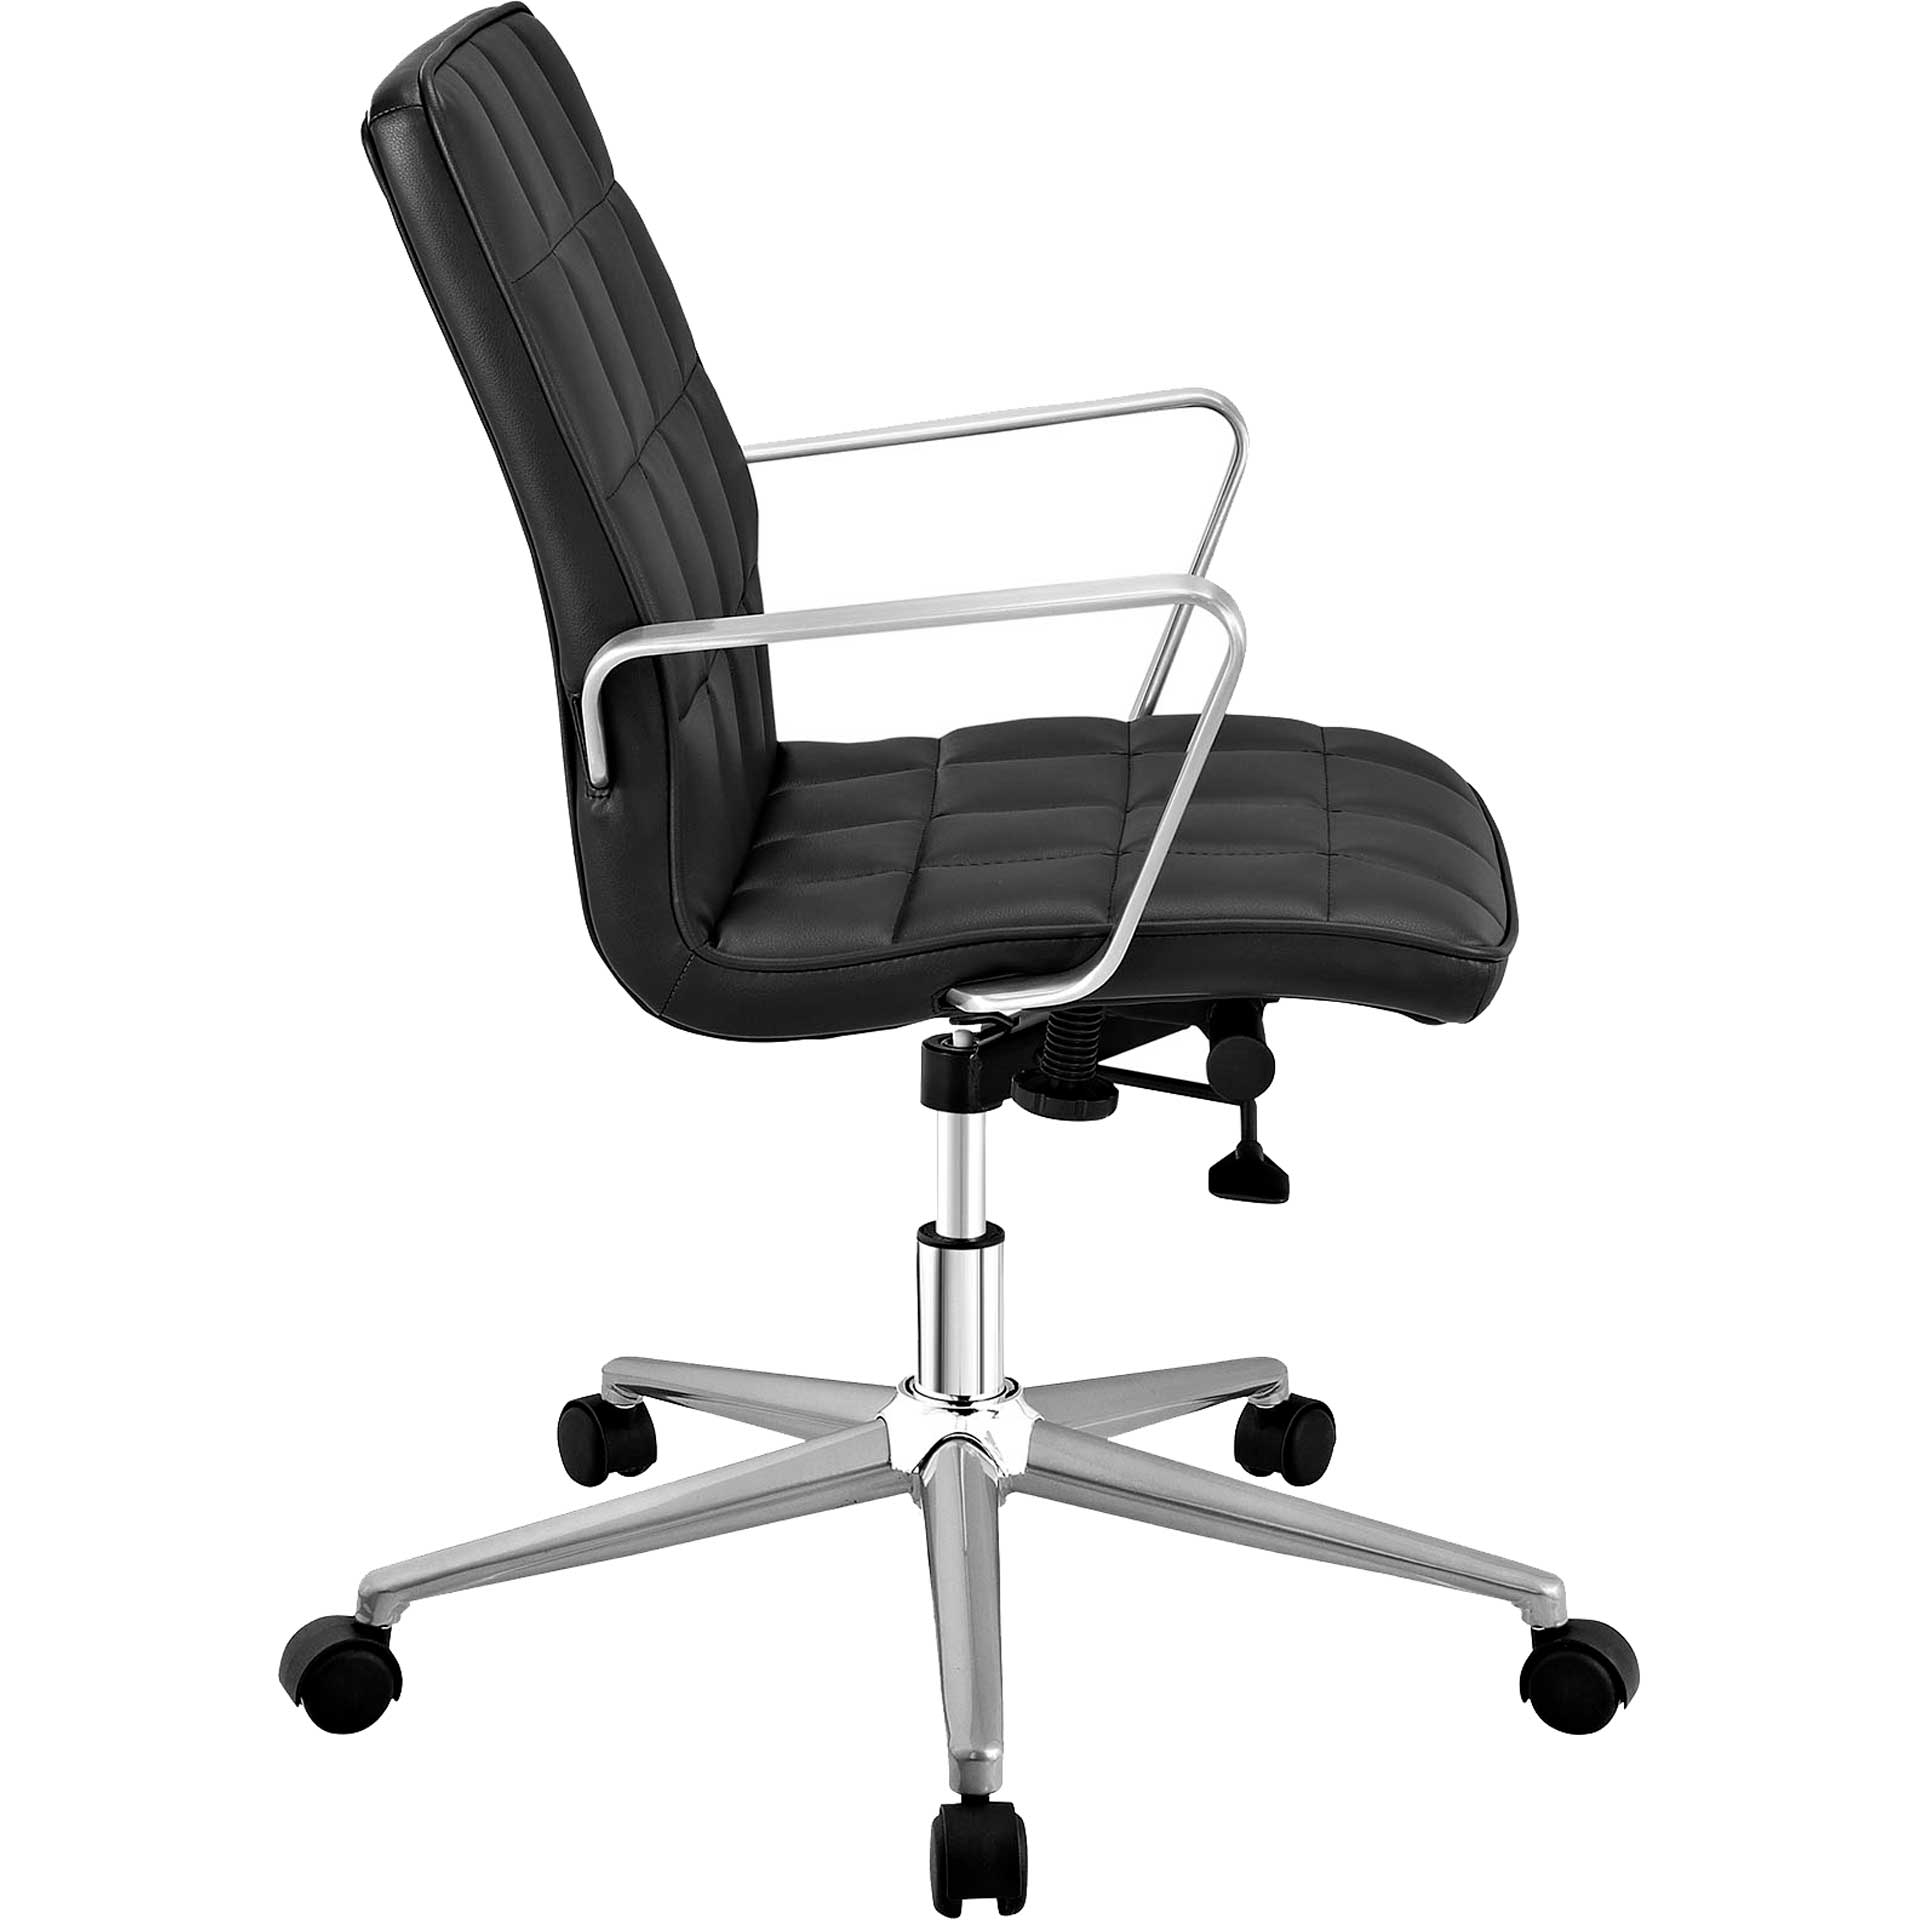 Tieton Office Chair Black